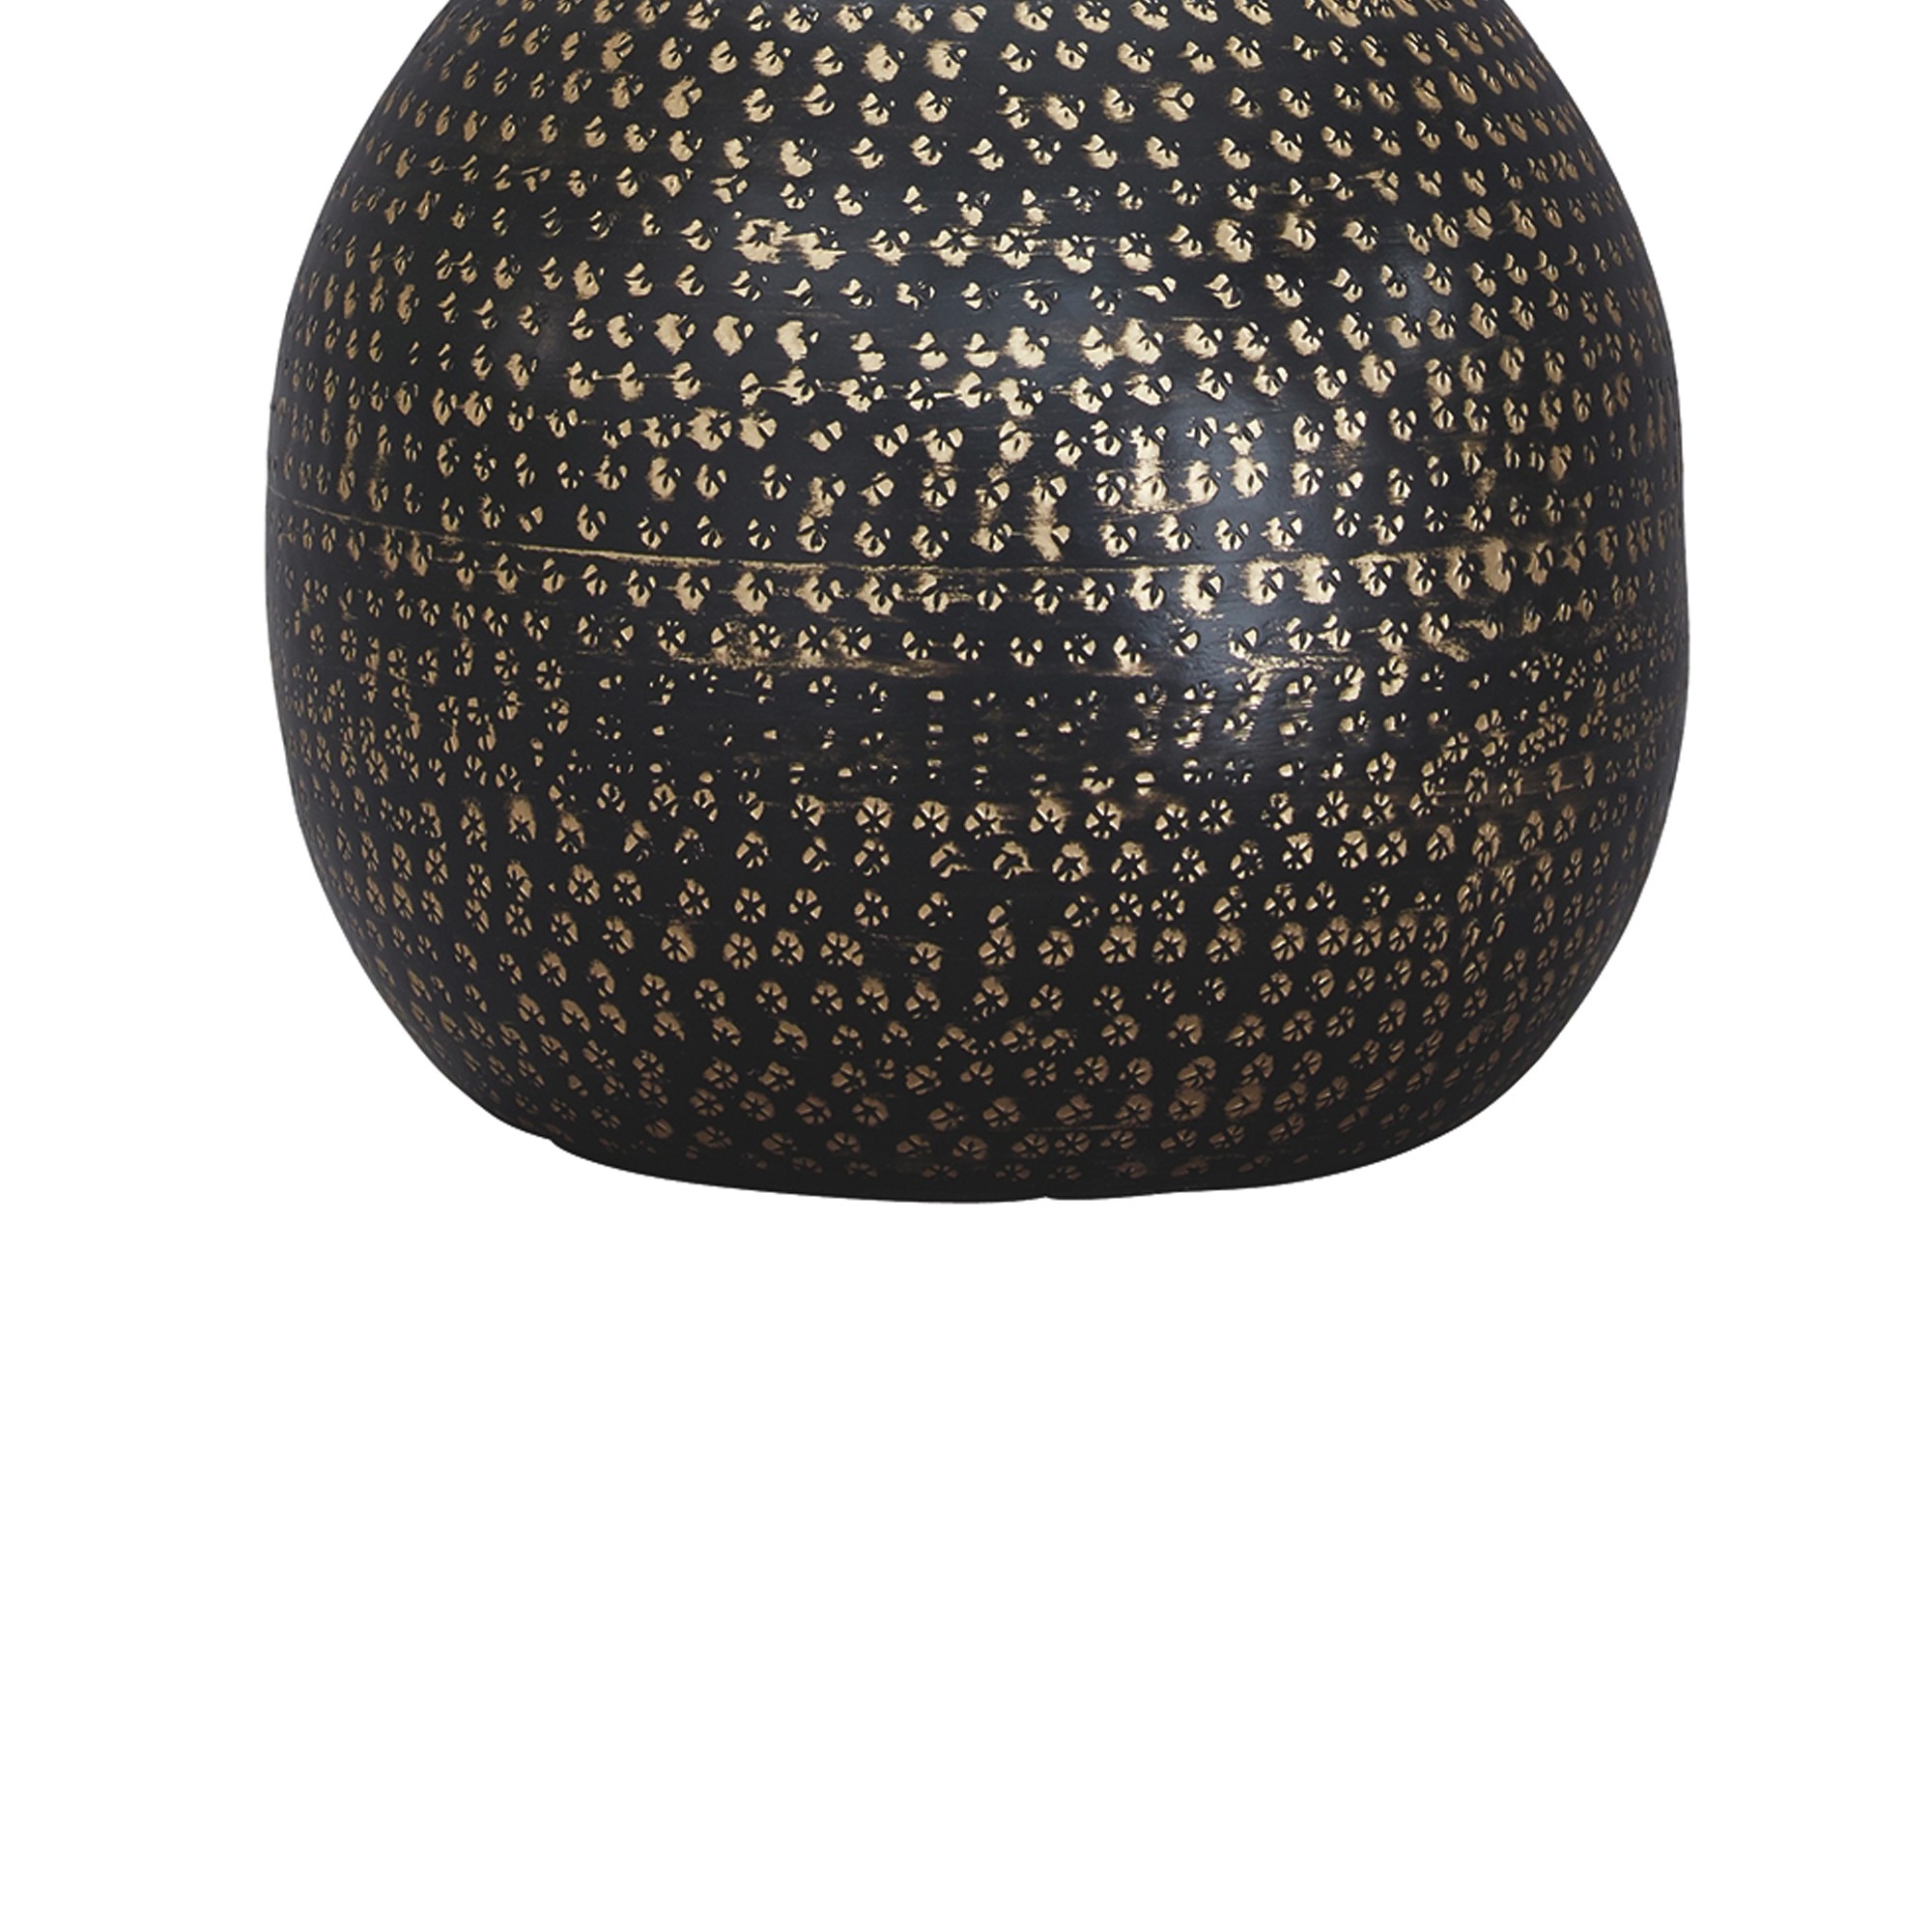 Pot Bellied Base Metal Table Lamp With Dotted Pattern, Black- Saltoro Sherpi